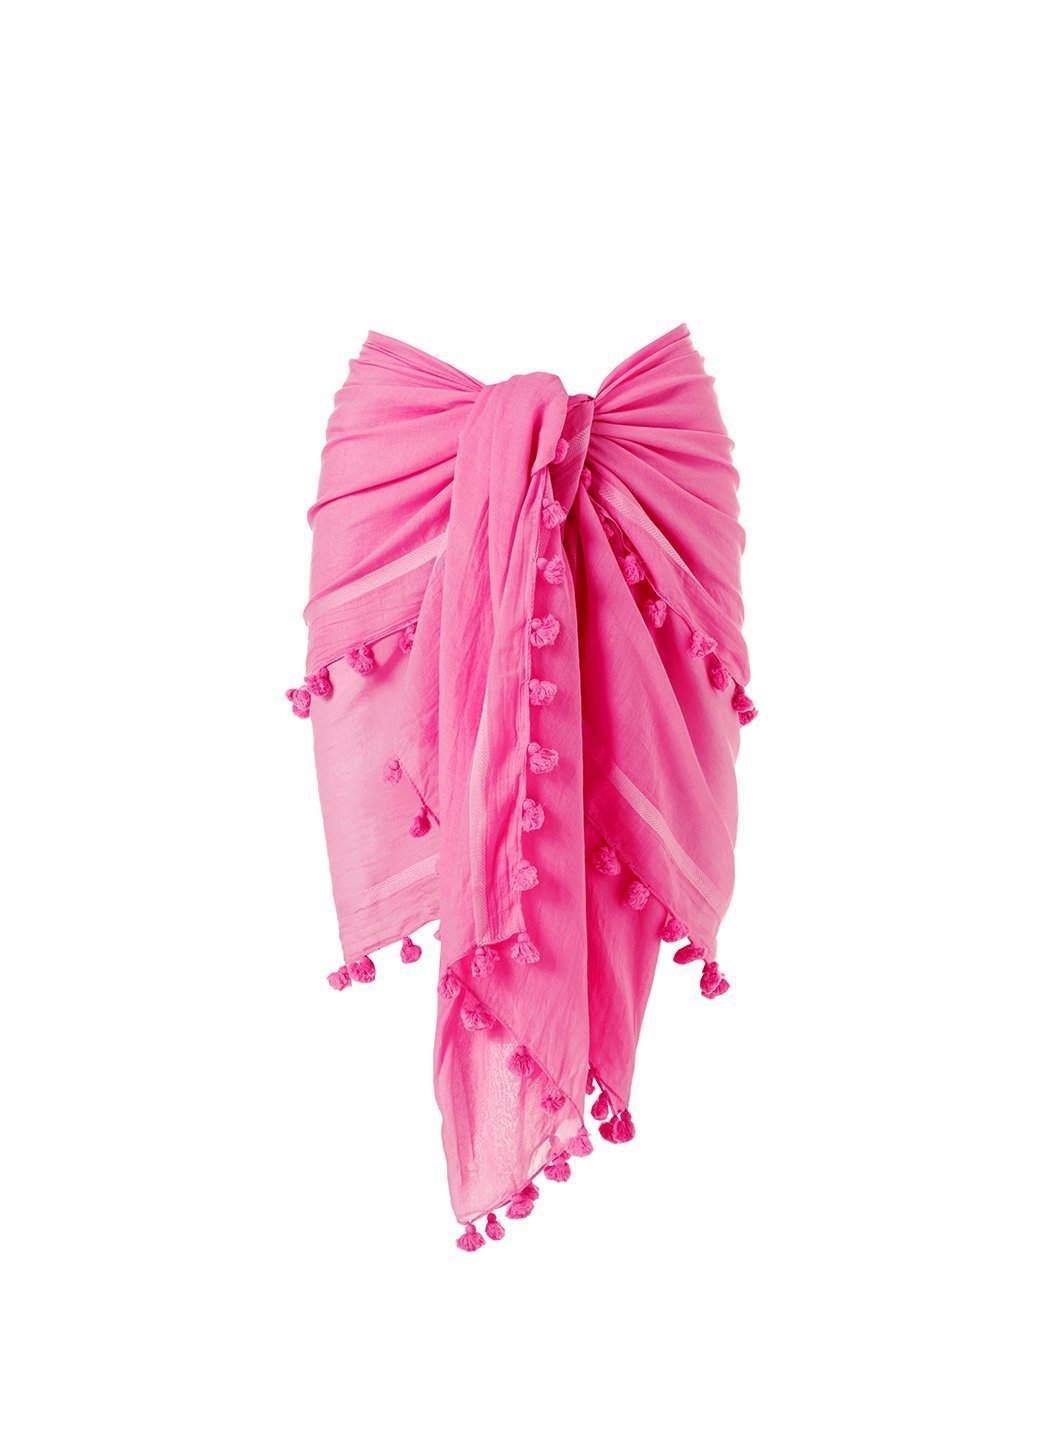 Melissa Odabash Pareo Color: Hot Pink  at Petticoat Lane  Greenwich, CT